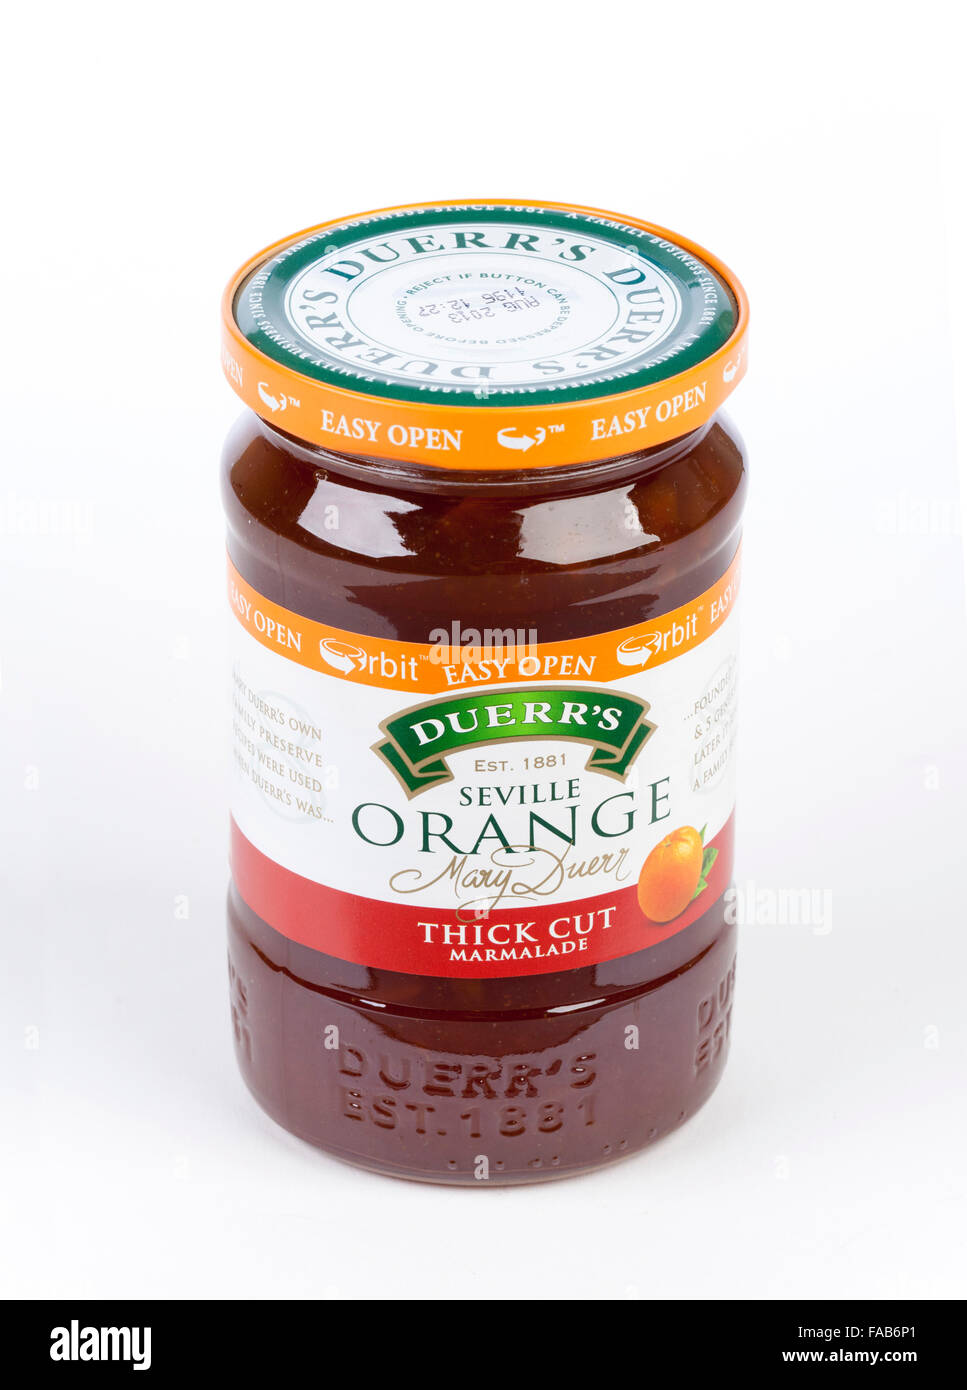 Duerr's seville orange marmalade Stock Photo